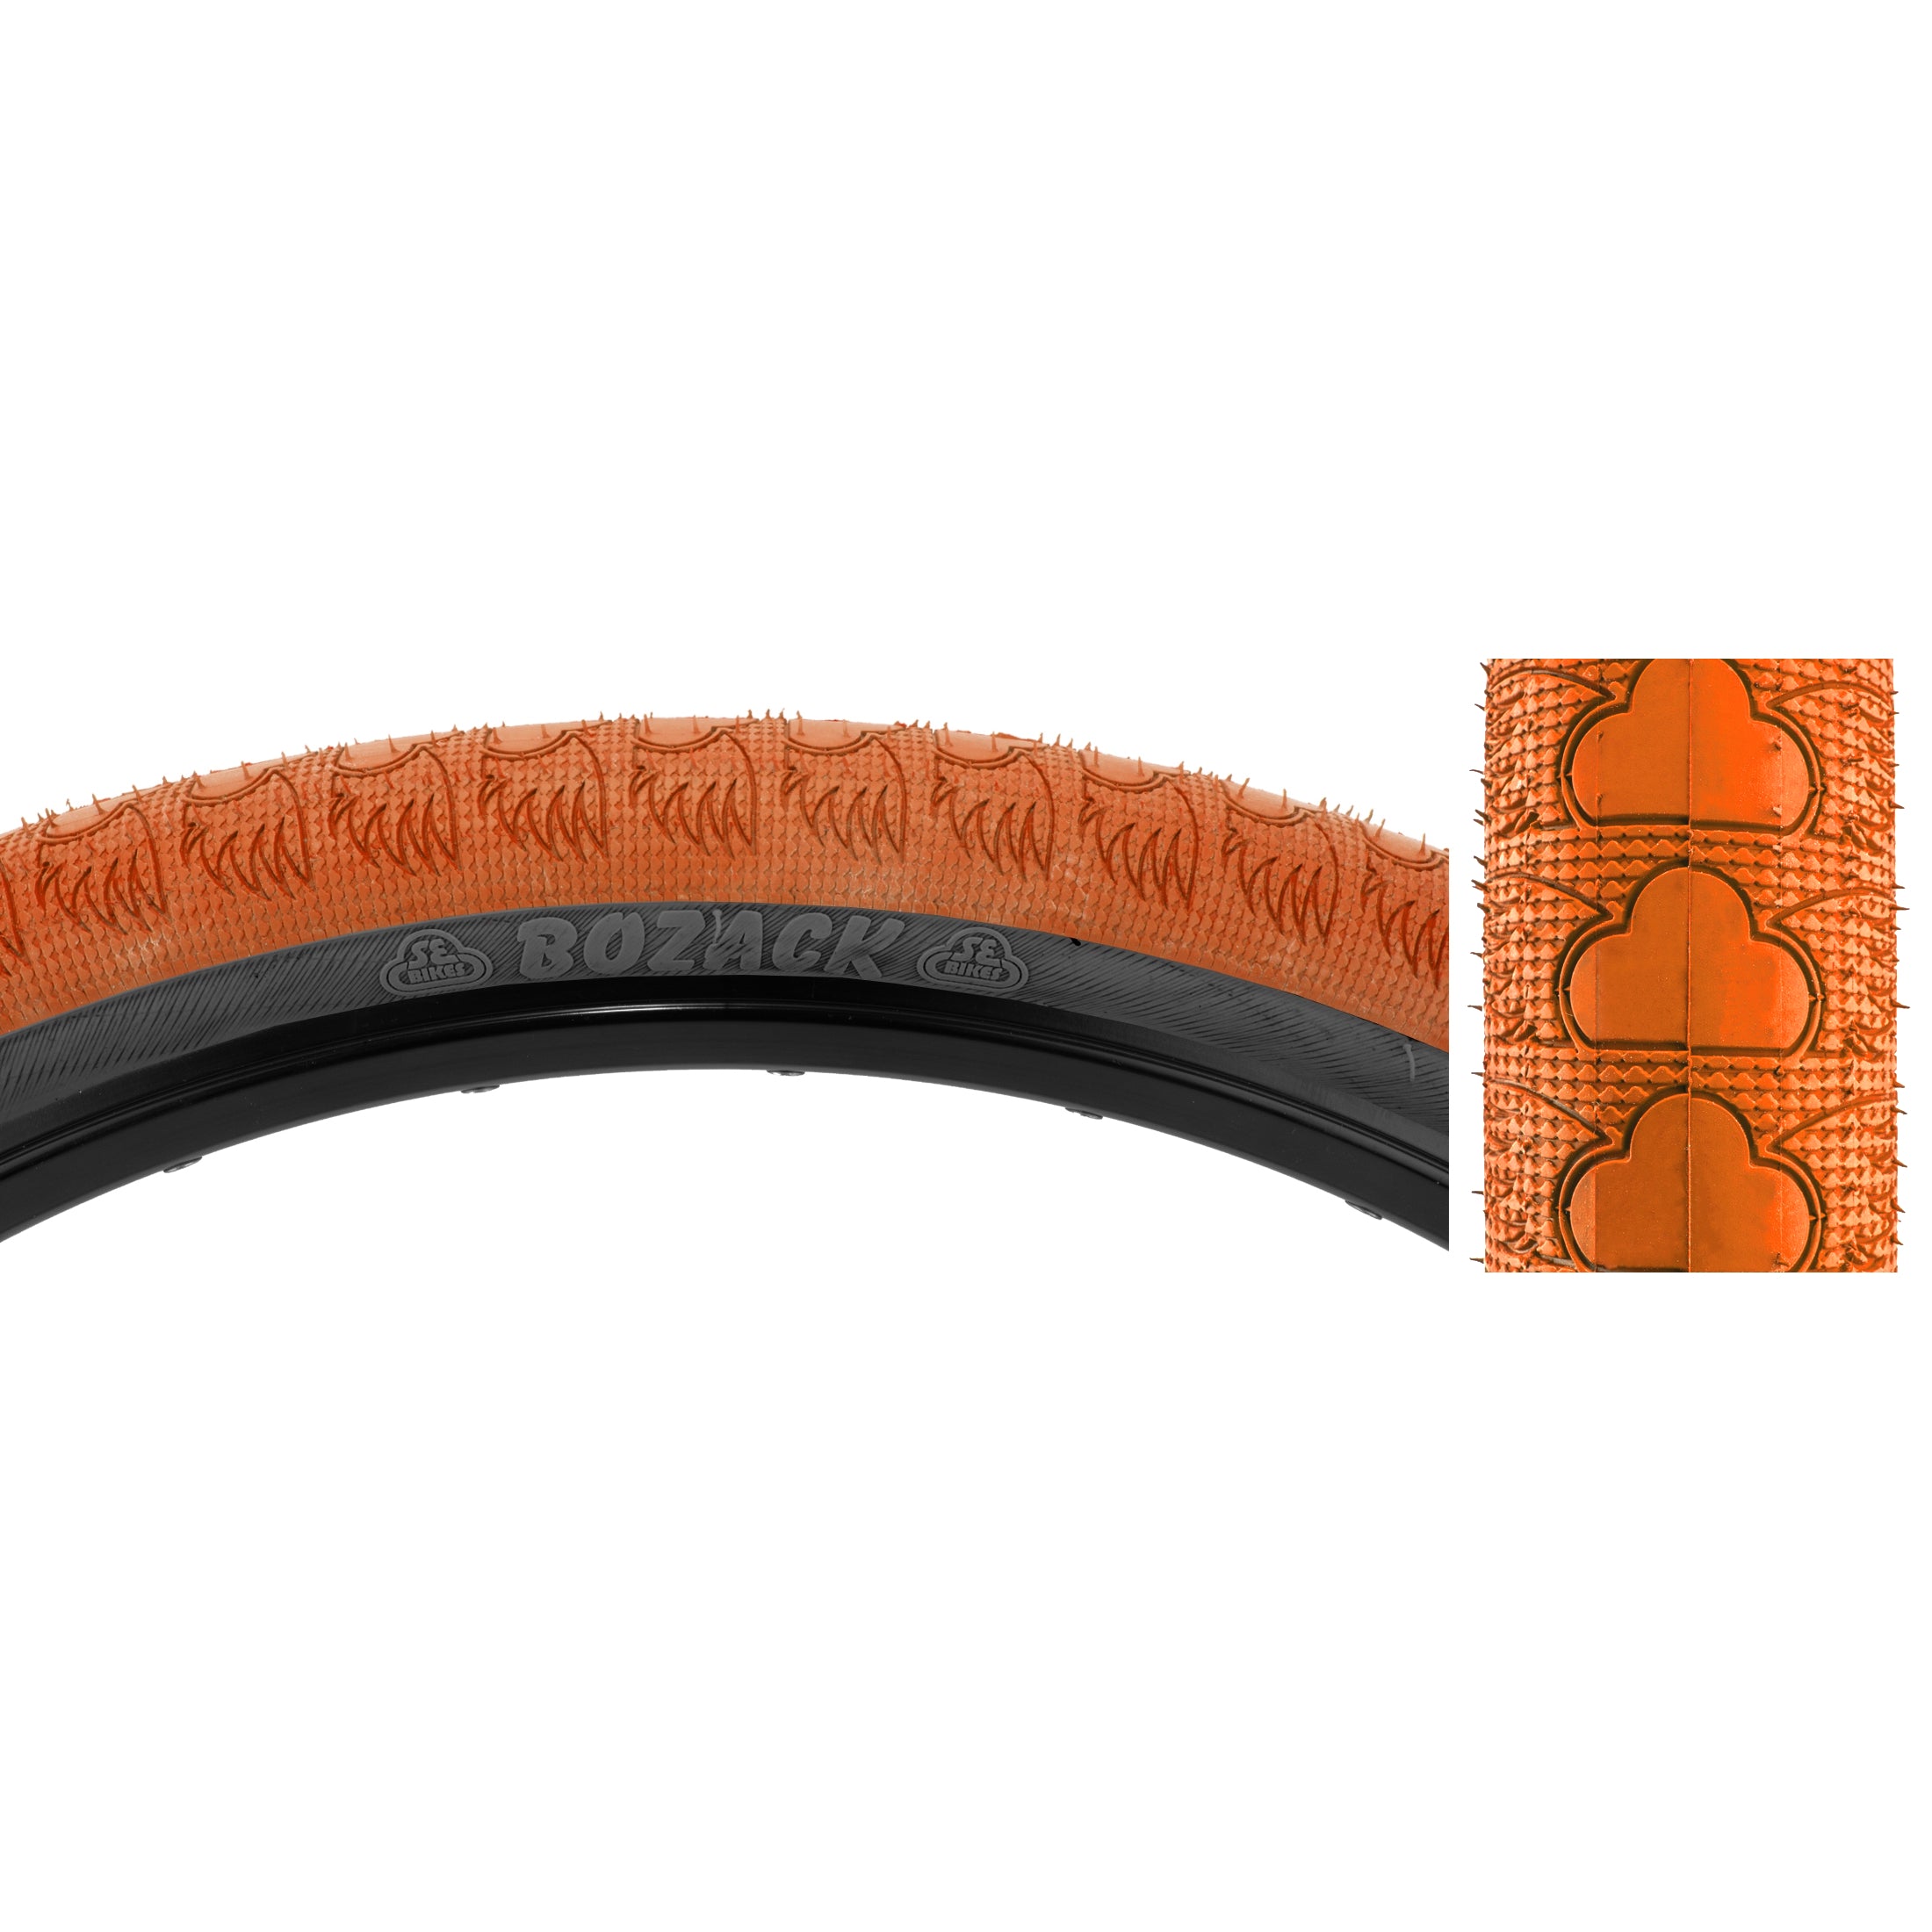 26x2.4 SE Racing Bozack BMX Tire - Orange w/ Black Sidewall